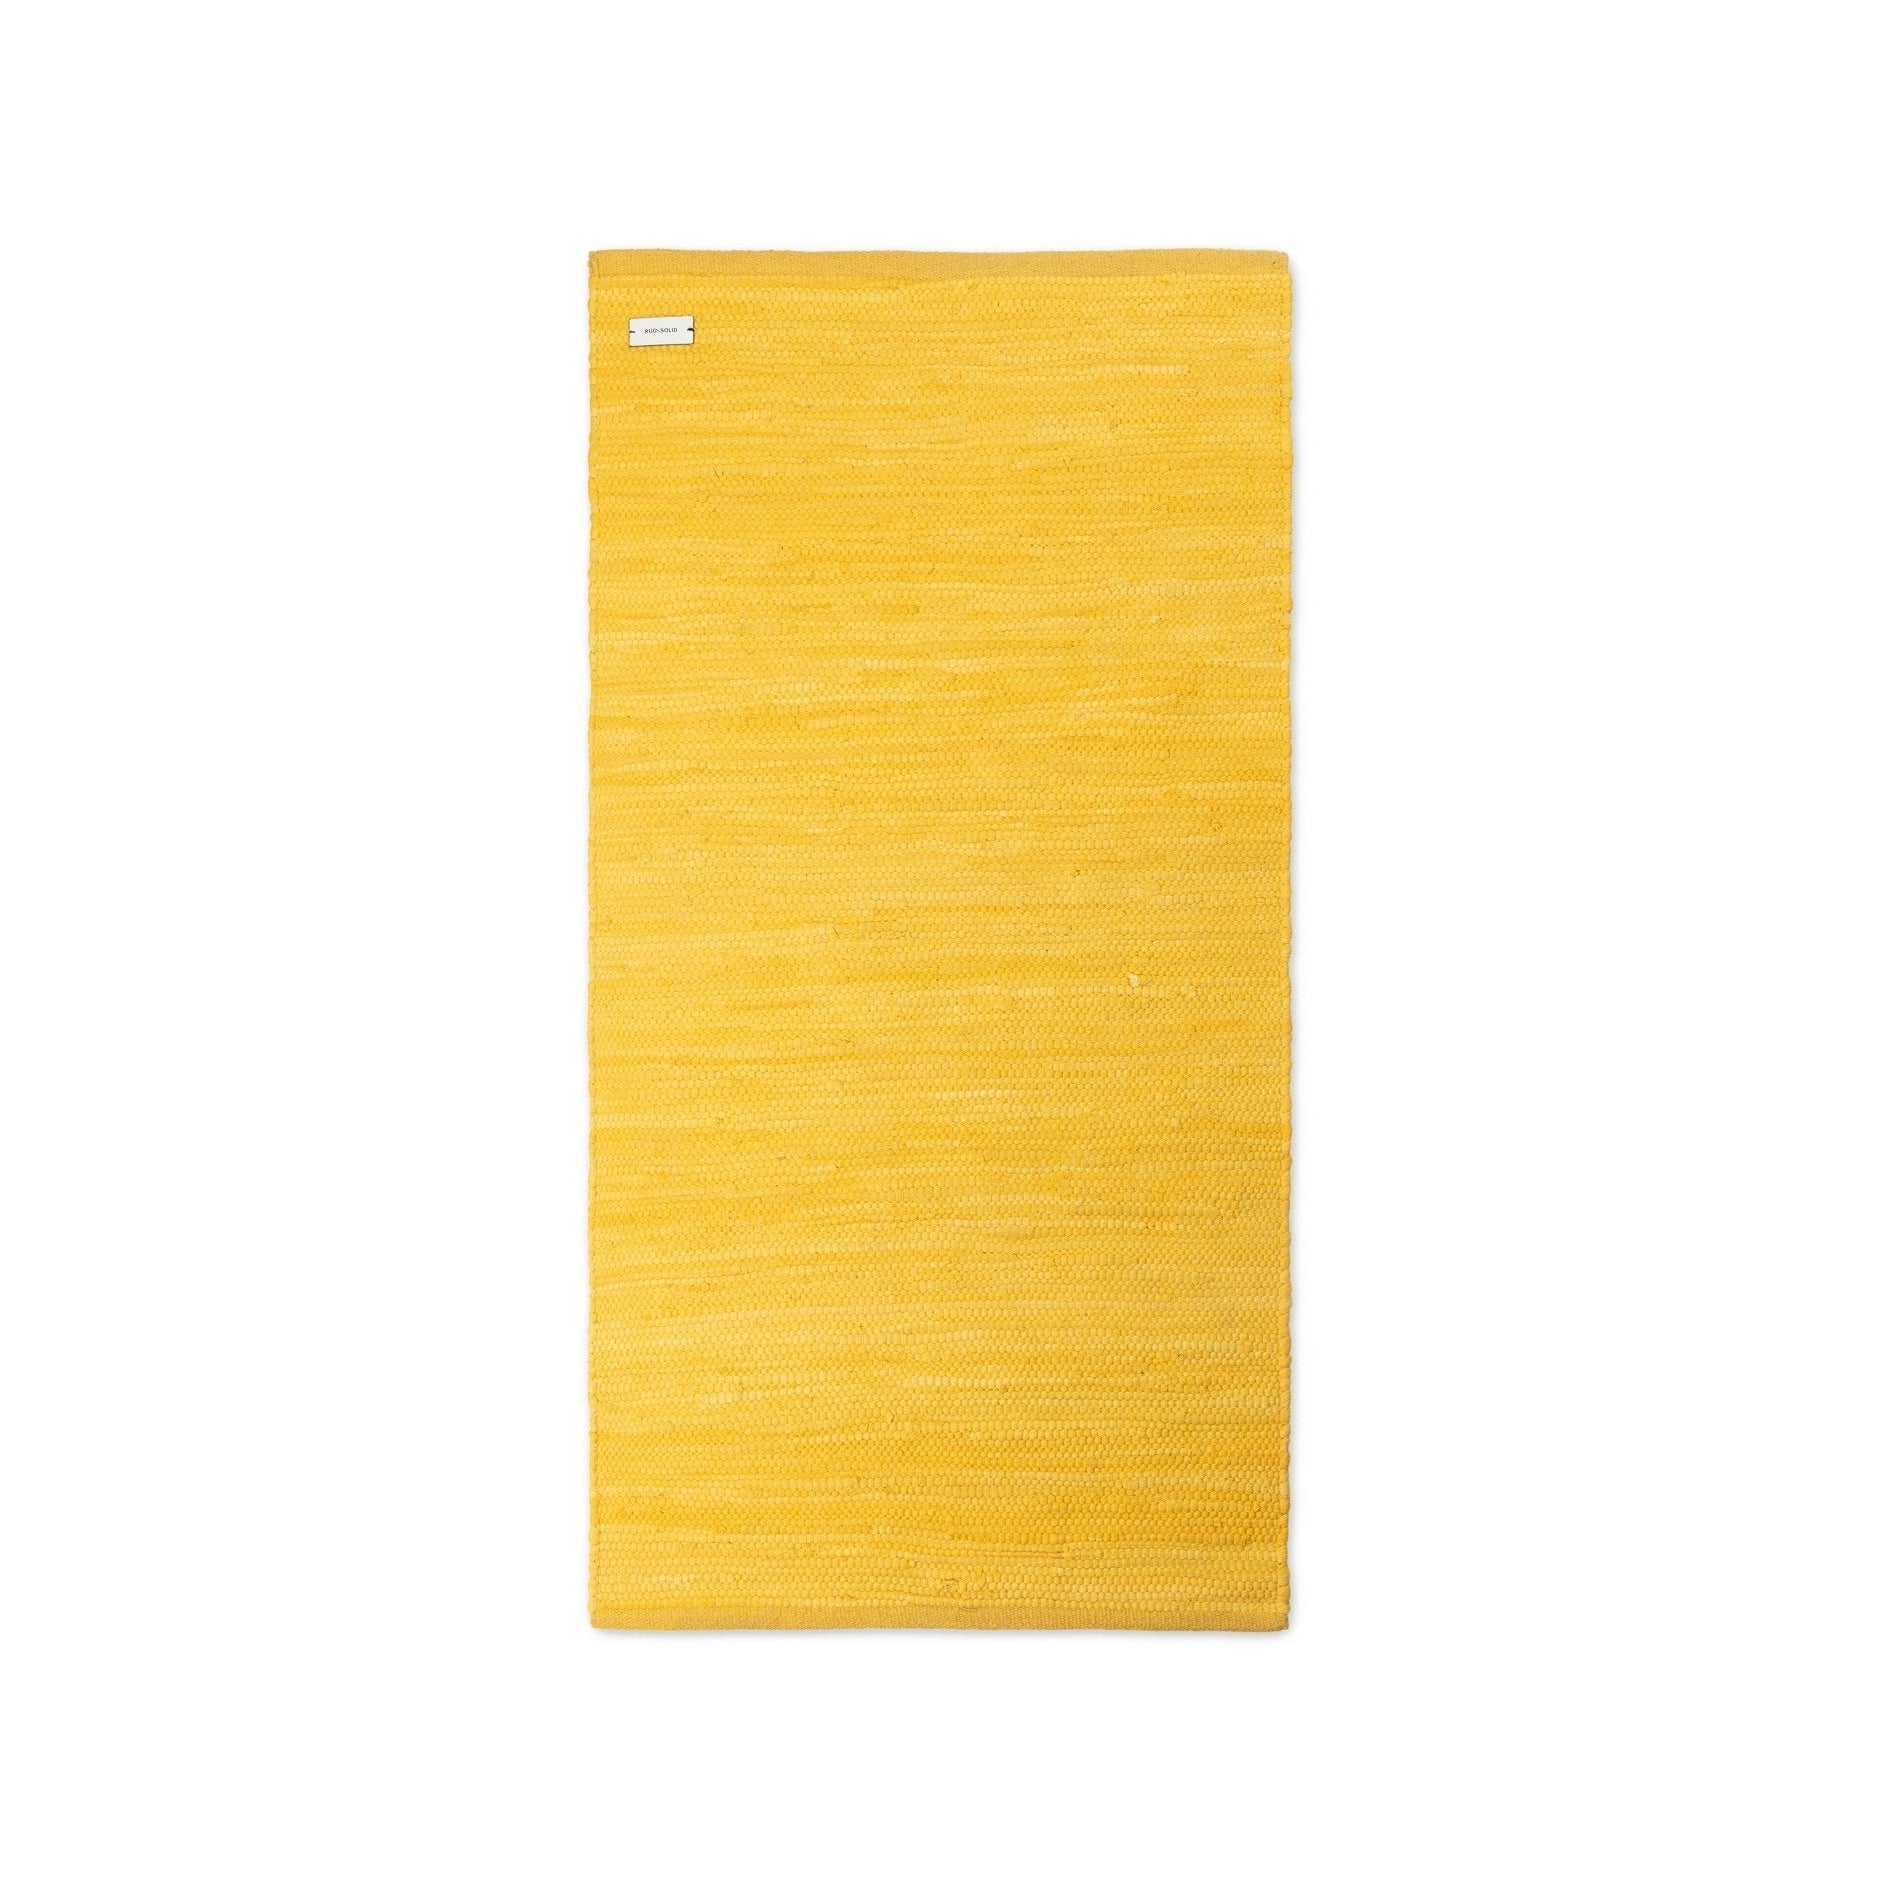 Rug Solid Cotton Carpet Raincoat Yellow, 60 X 90 Cm